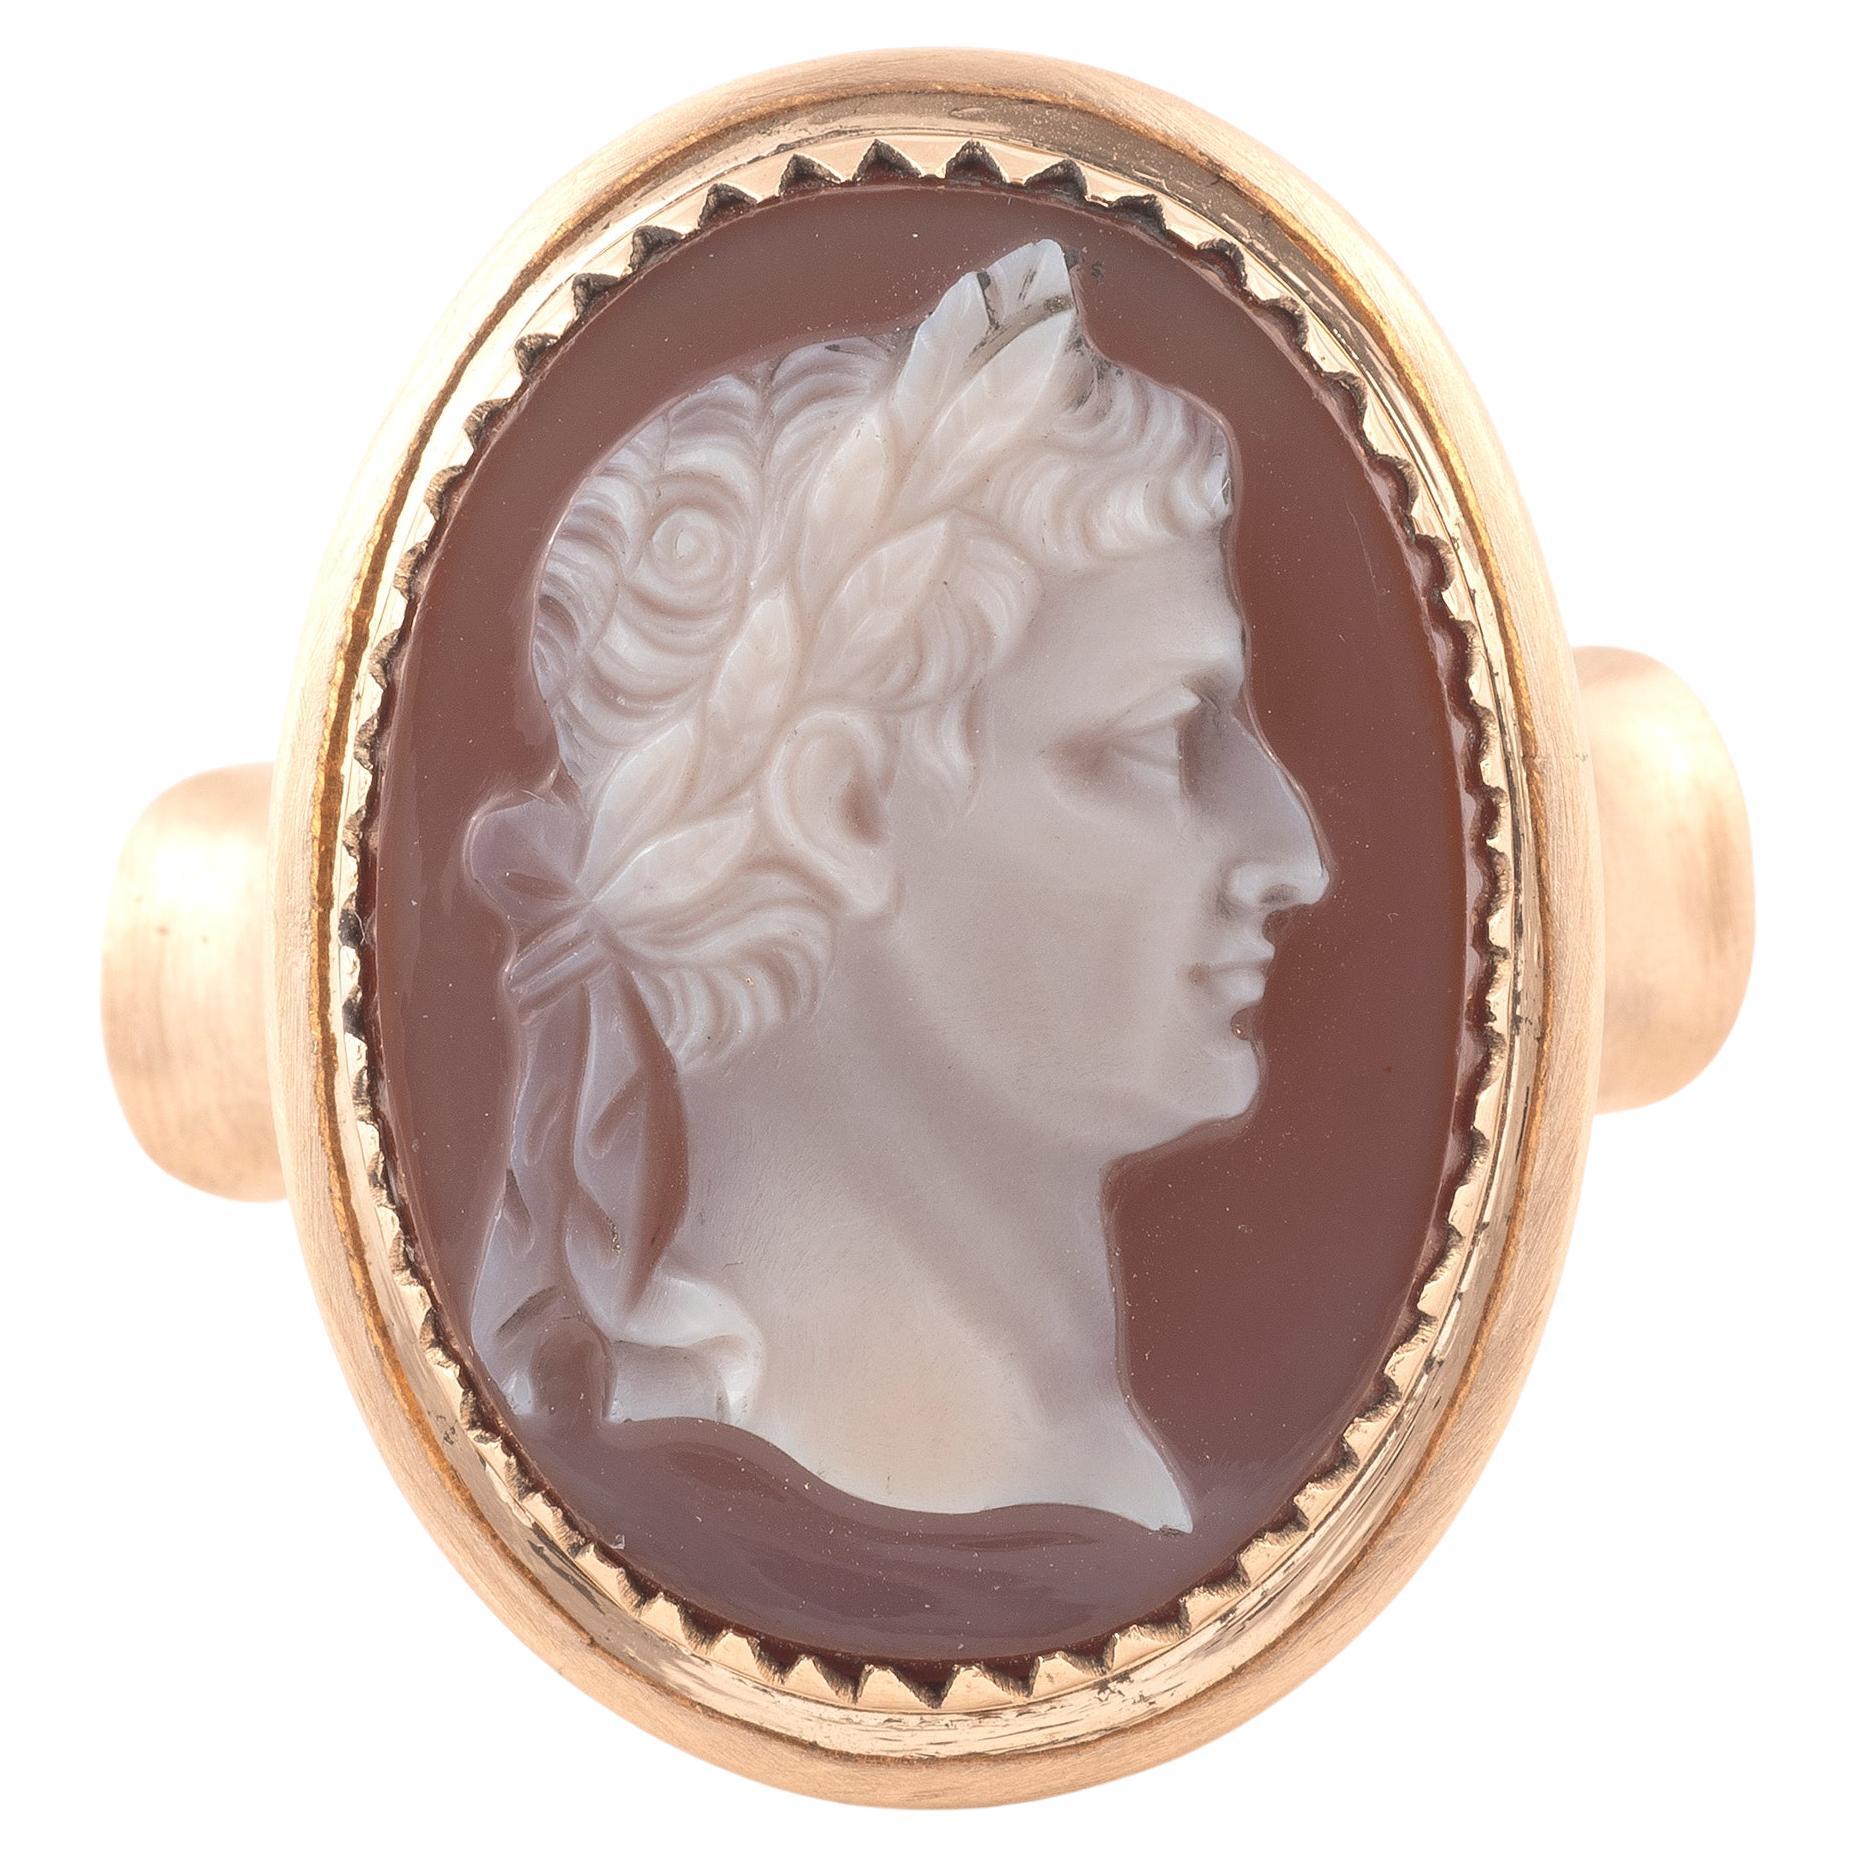 Cameo-Porträt des Kaisers Claudius aus Gold und Onyx aus dem 19. Jahrhundert